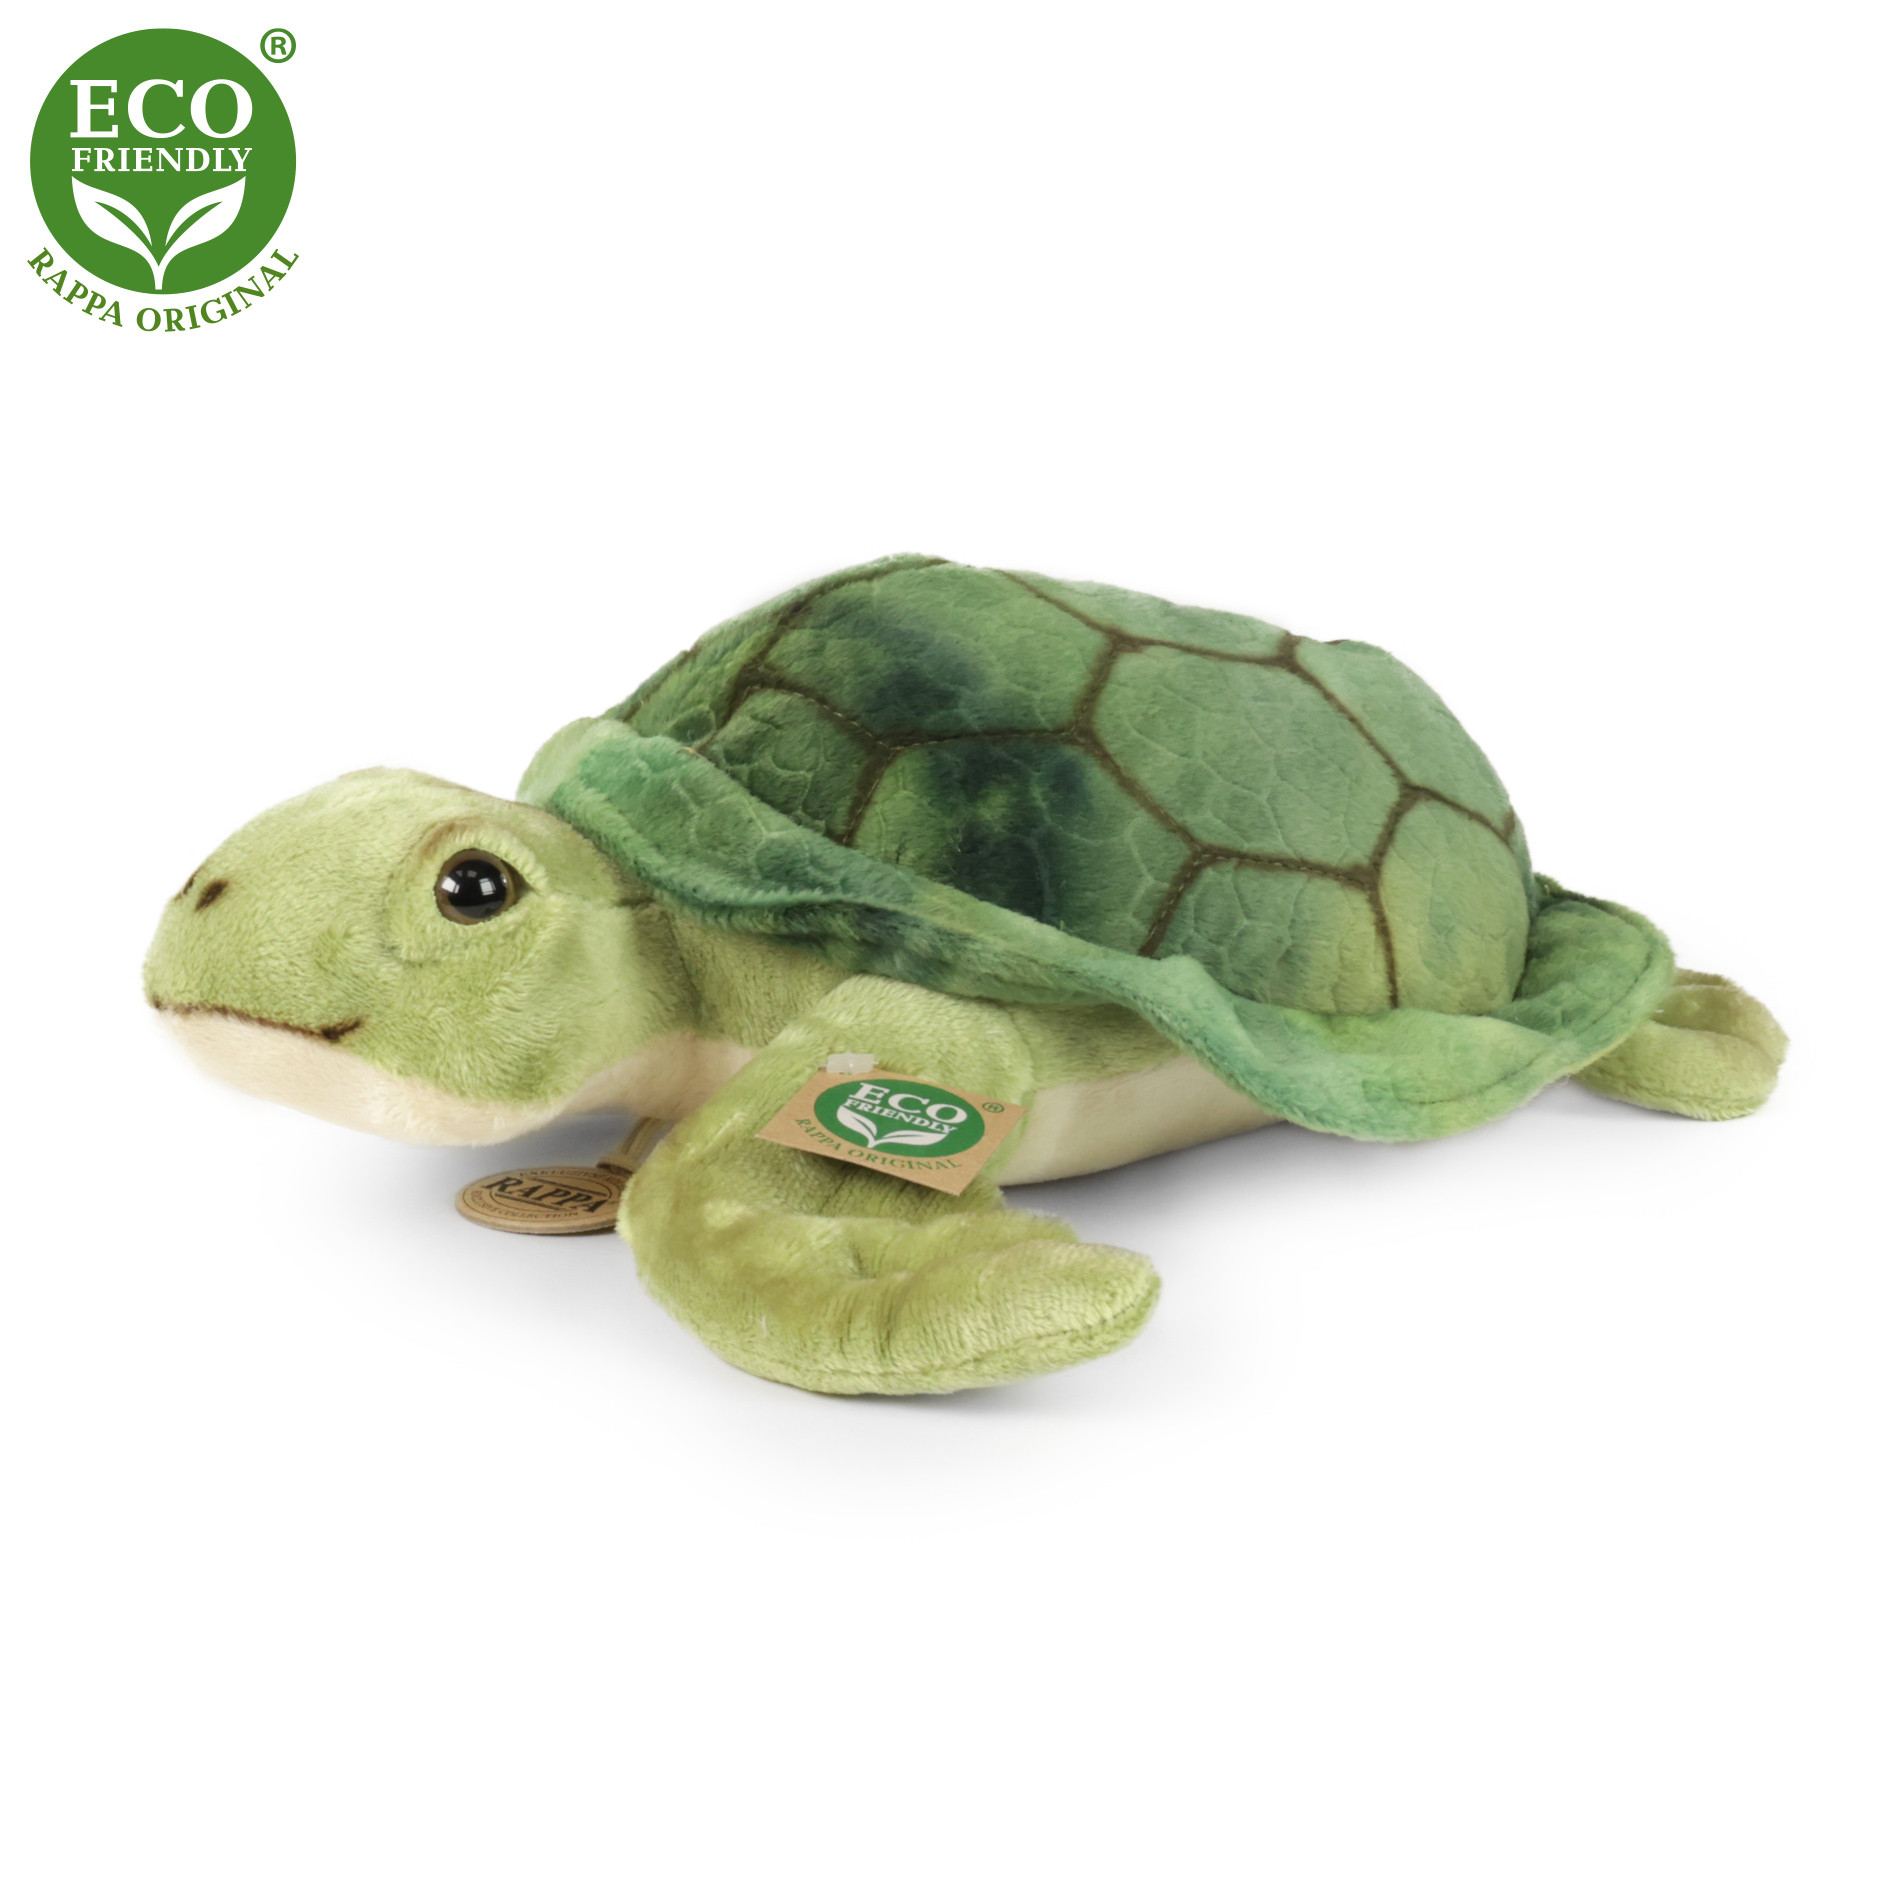 Plush water turtle 20 cm ECO-FRIENDLY